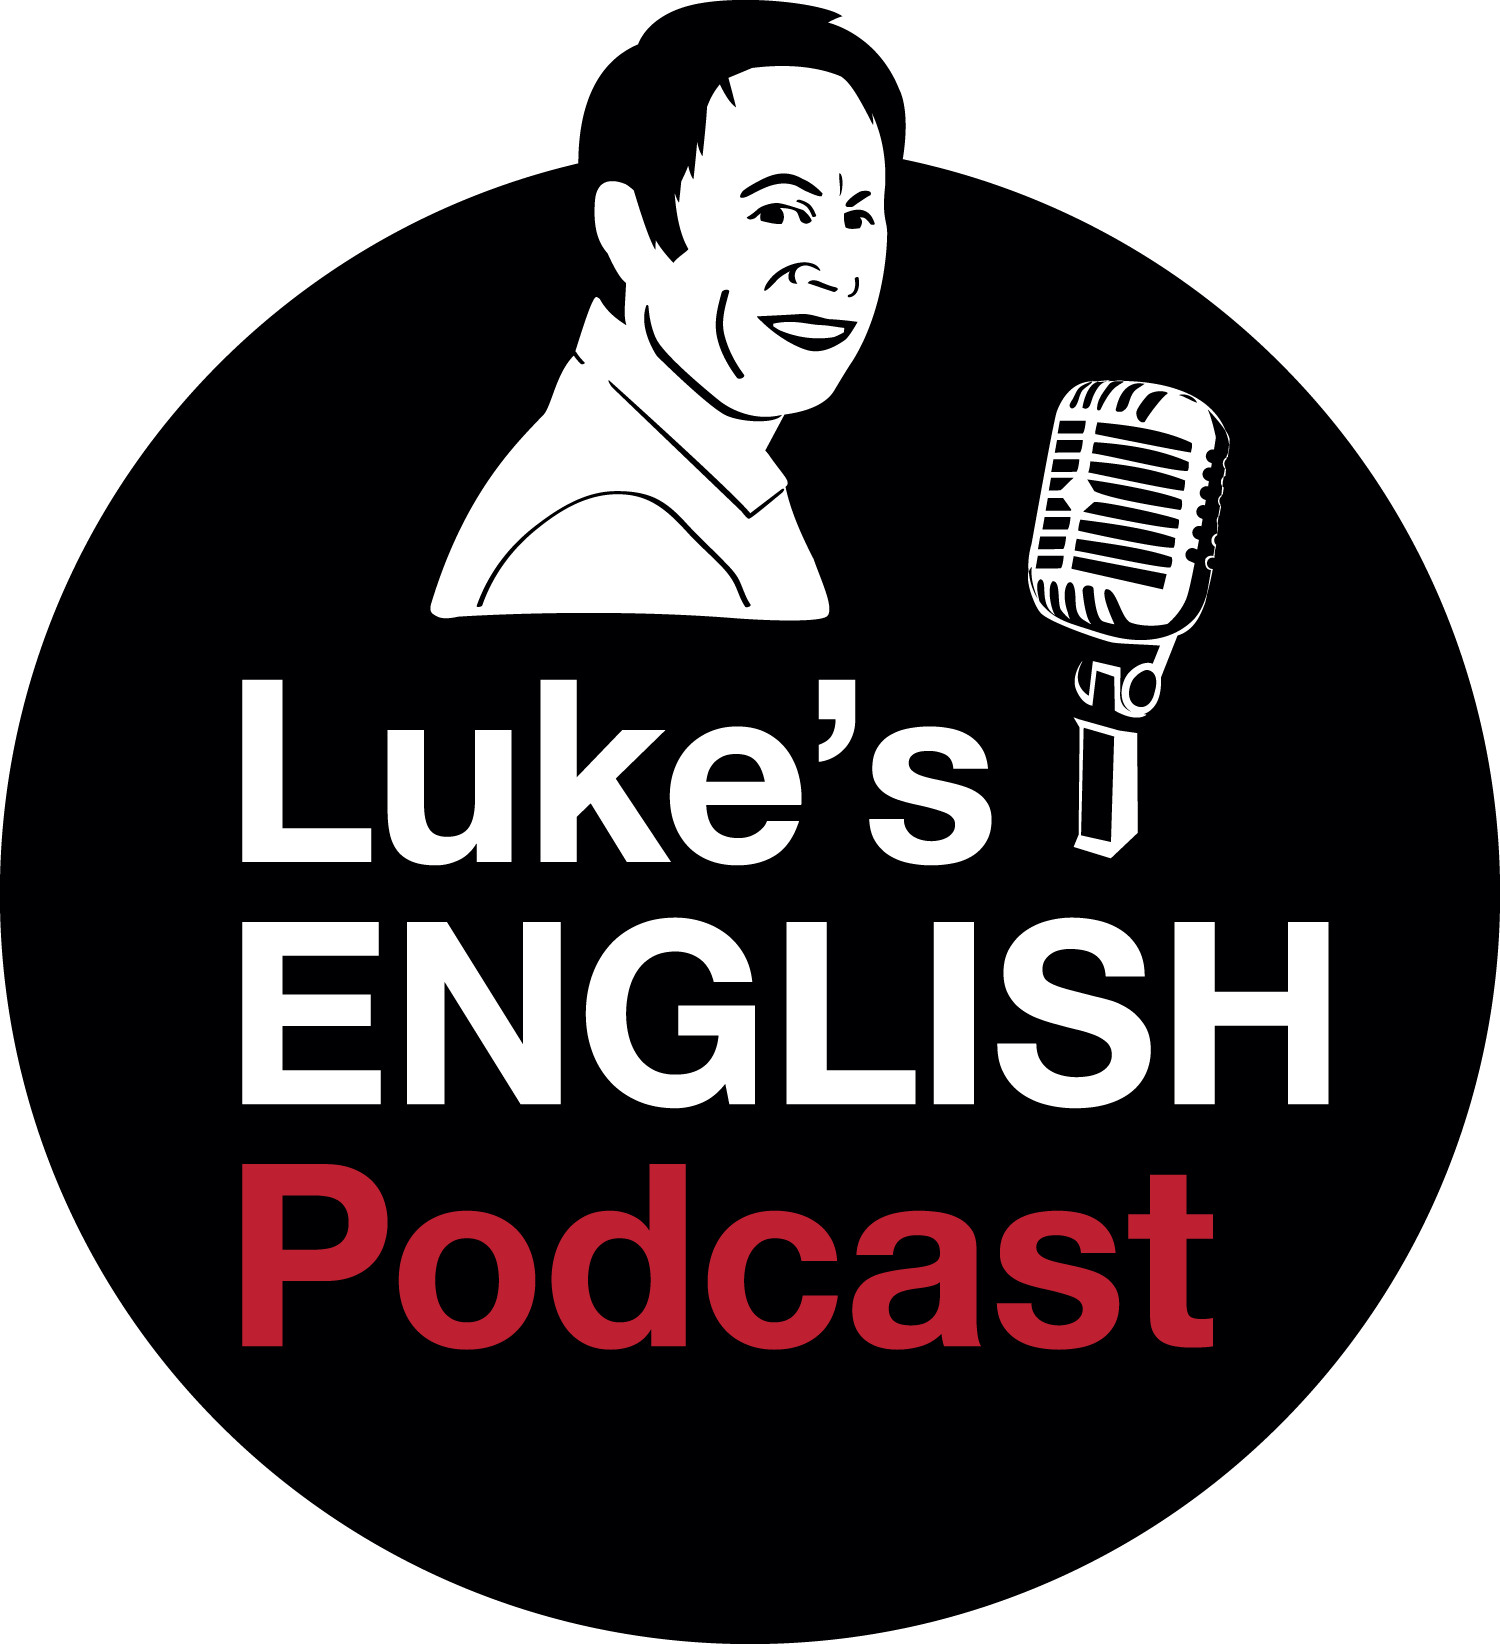 Luke's English Podcast.